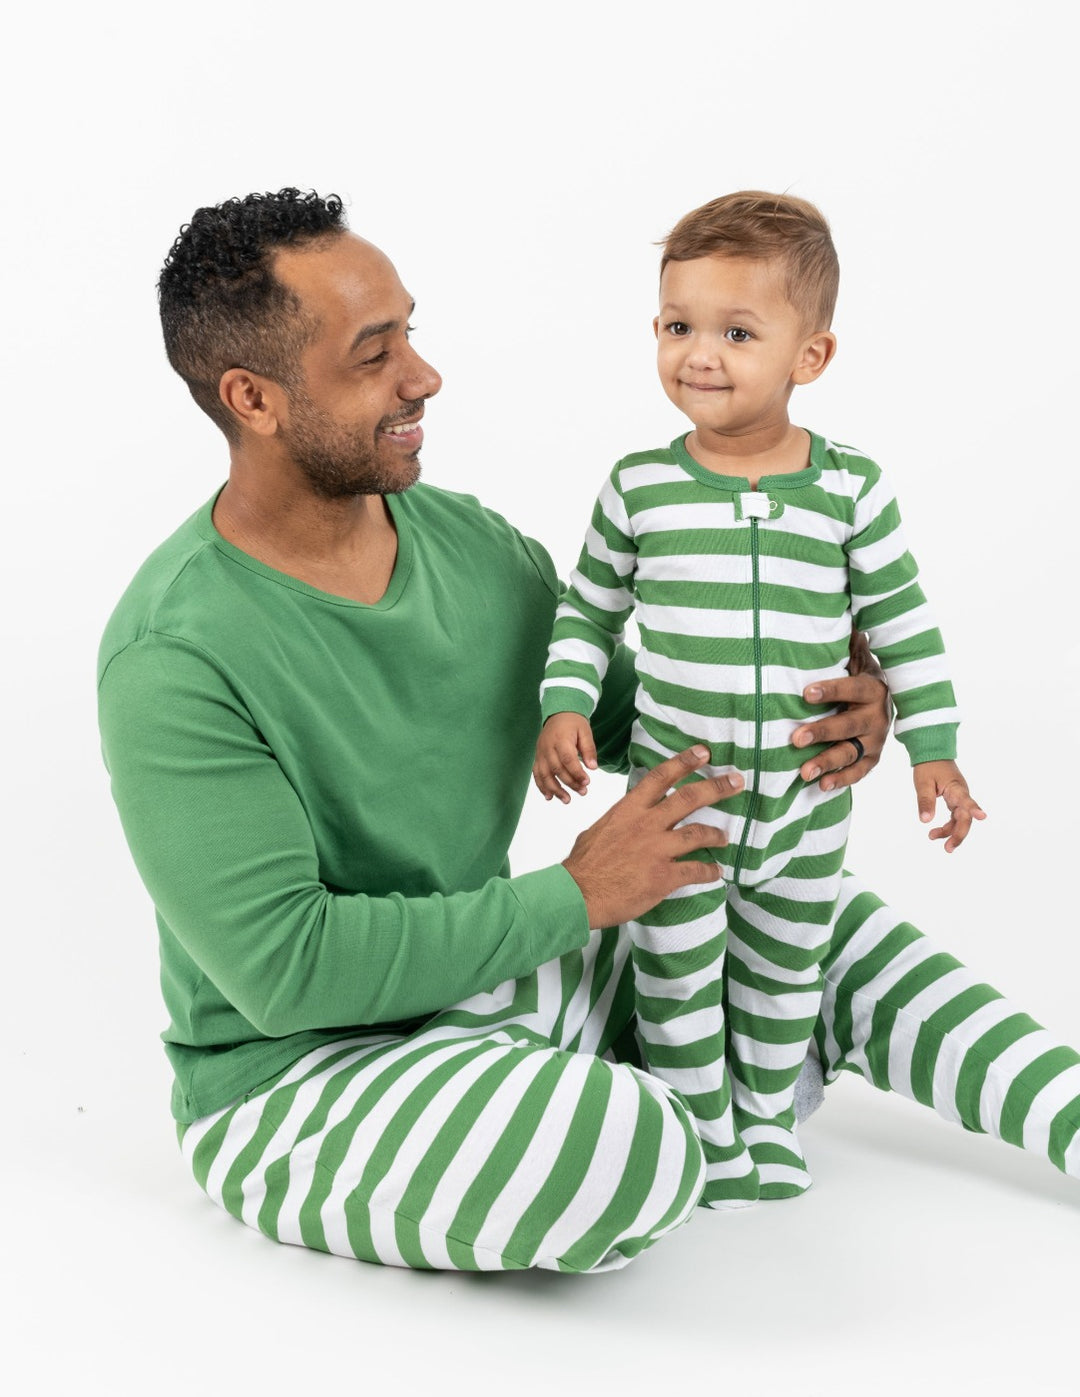 Green & White Striped 2-piece Pajama